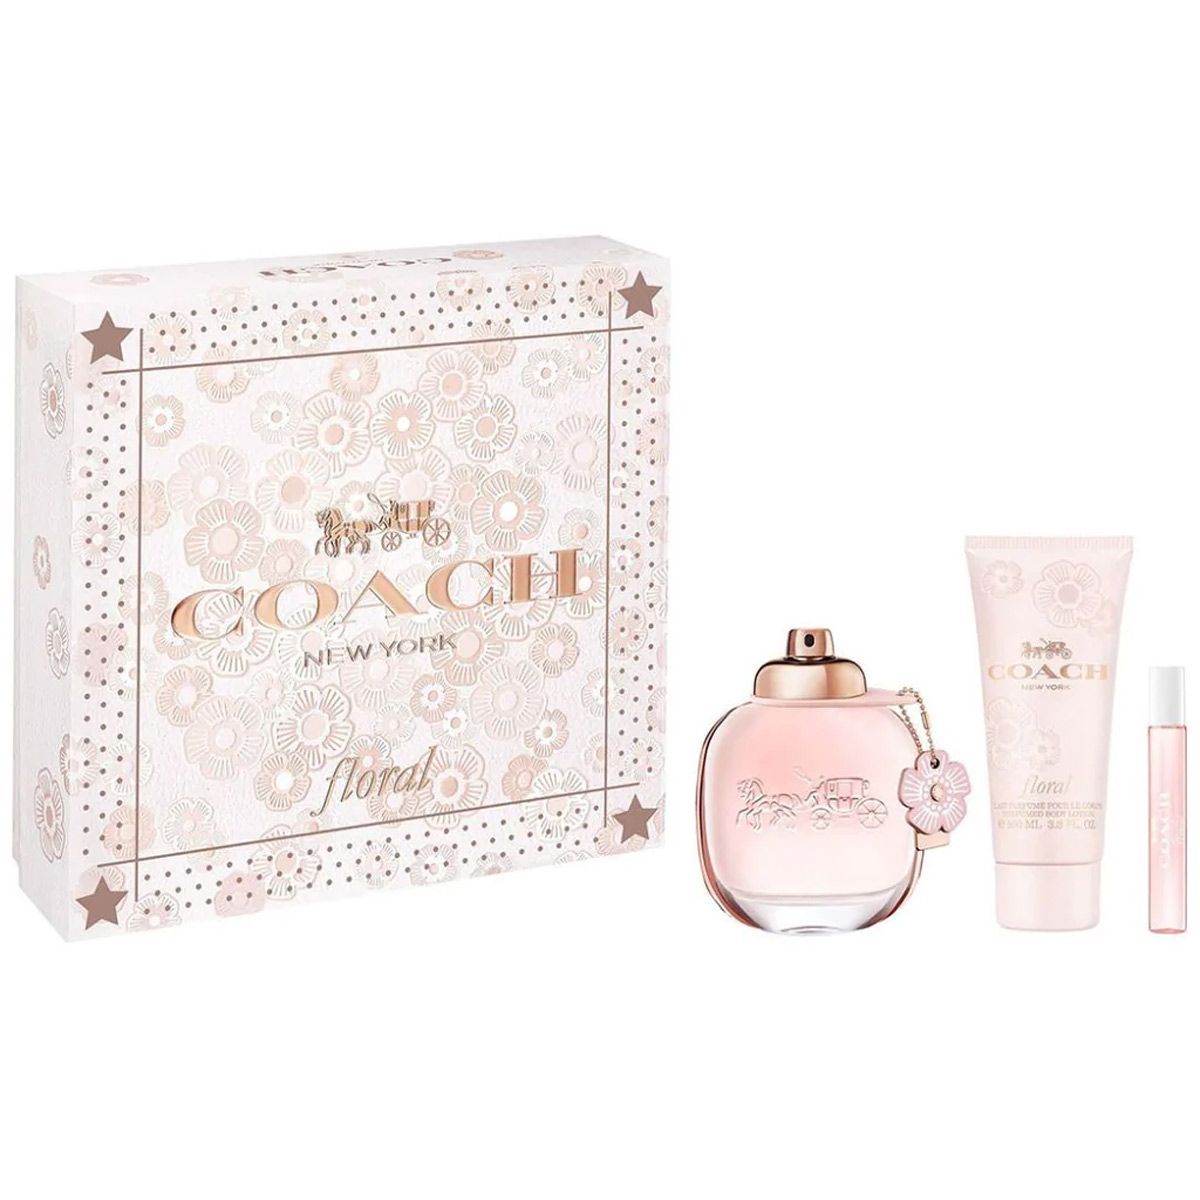 Total 55+ imagen coach floral perfume gift set